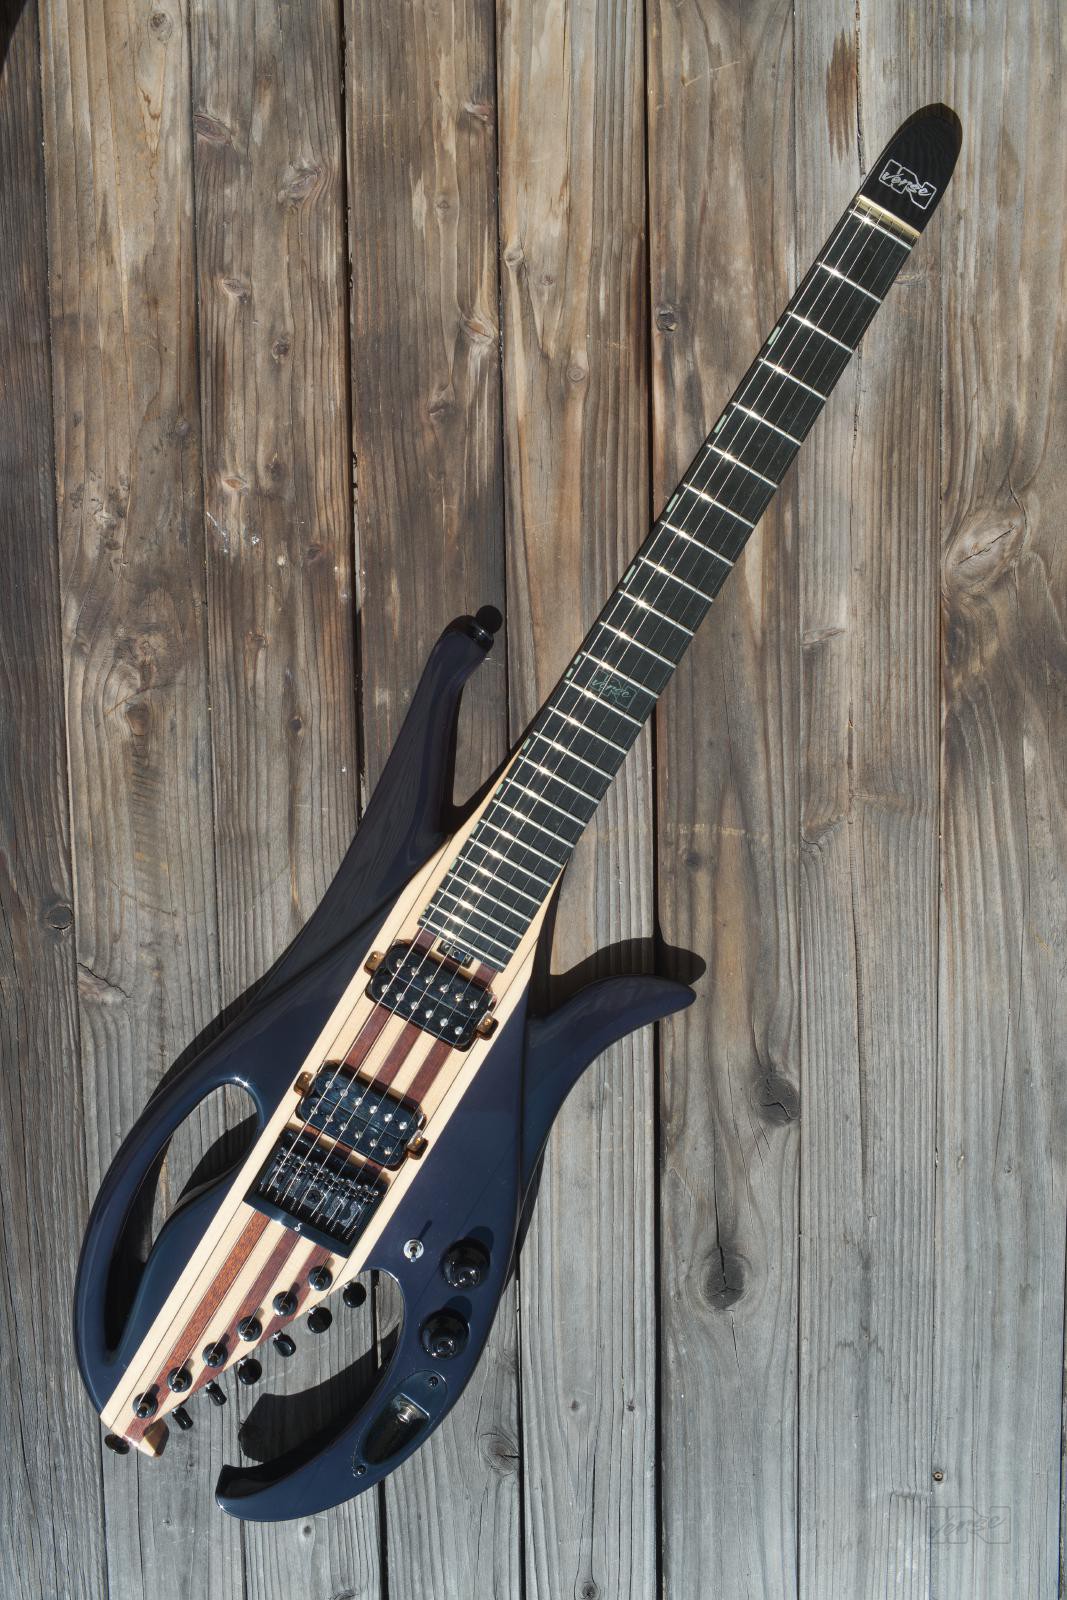 Shark guitar black